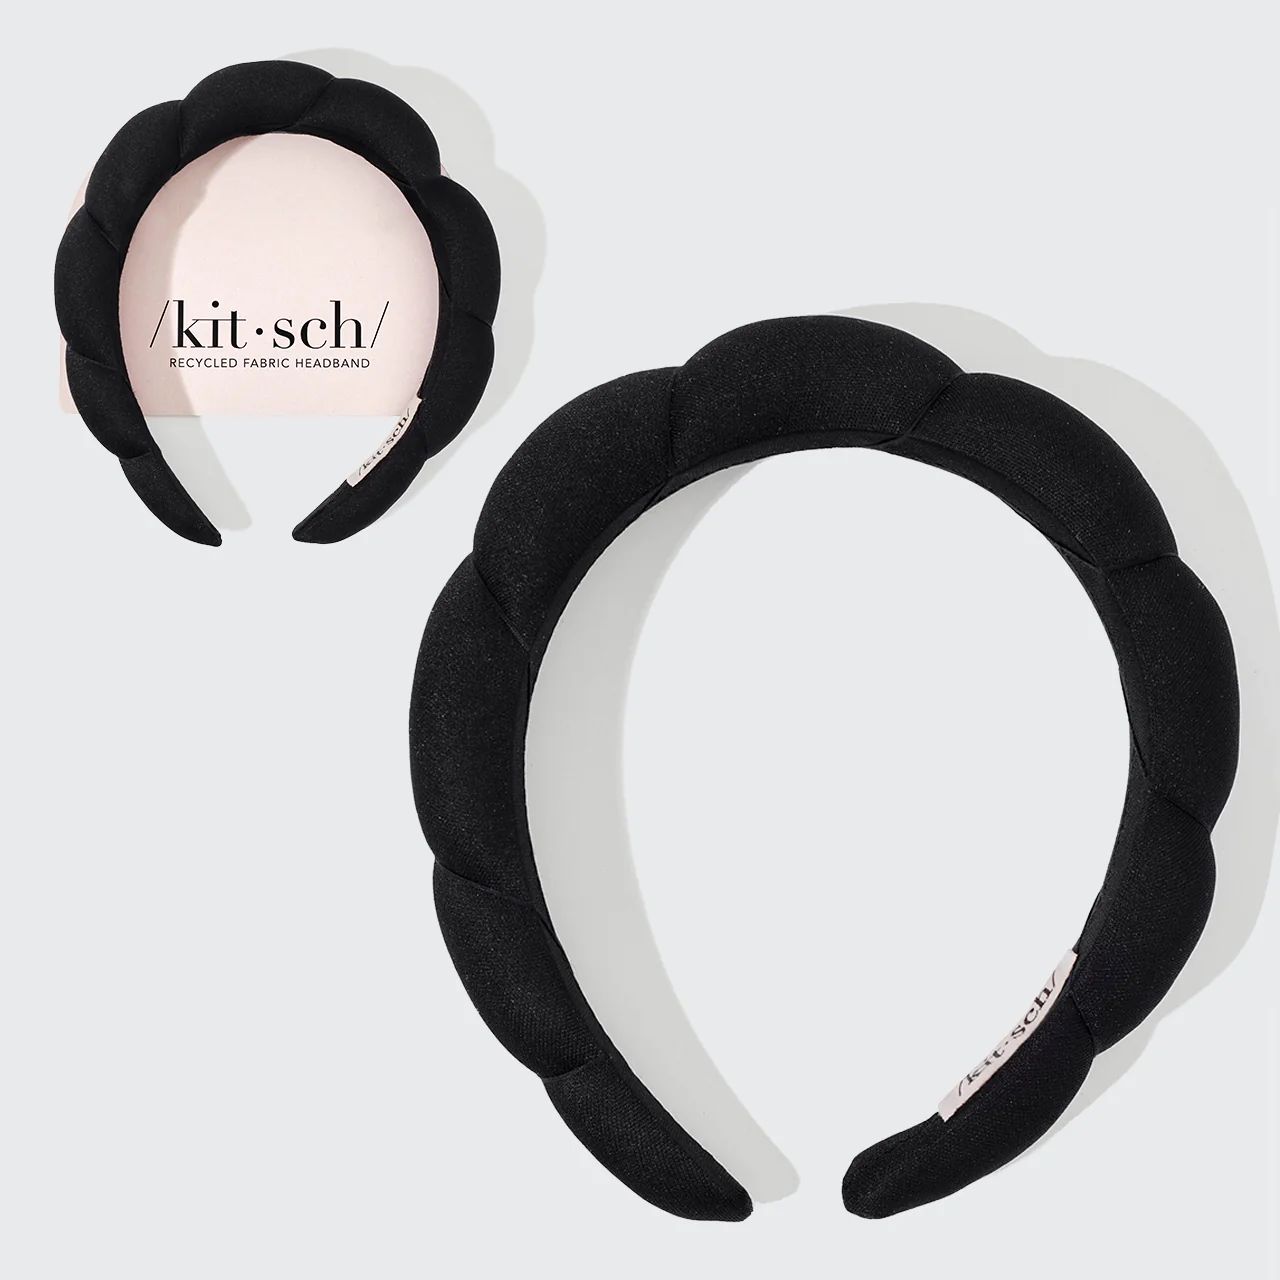 Recycled Fabric Cloud Headband 1pc - Black | Kitsch